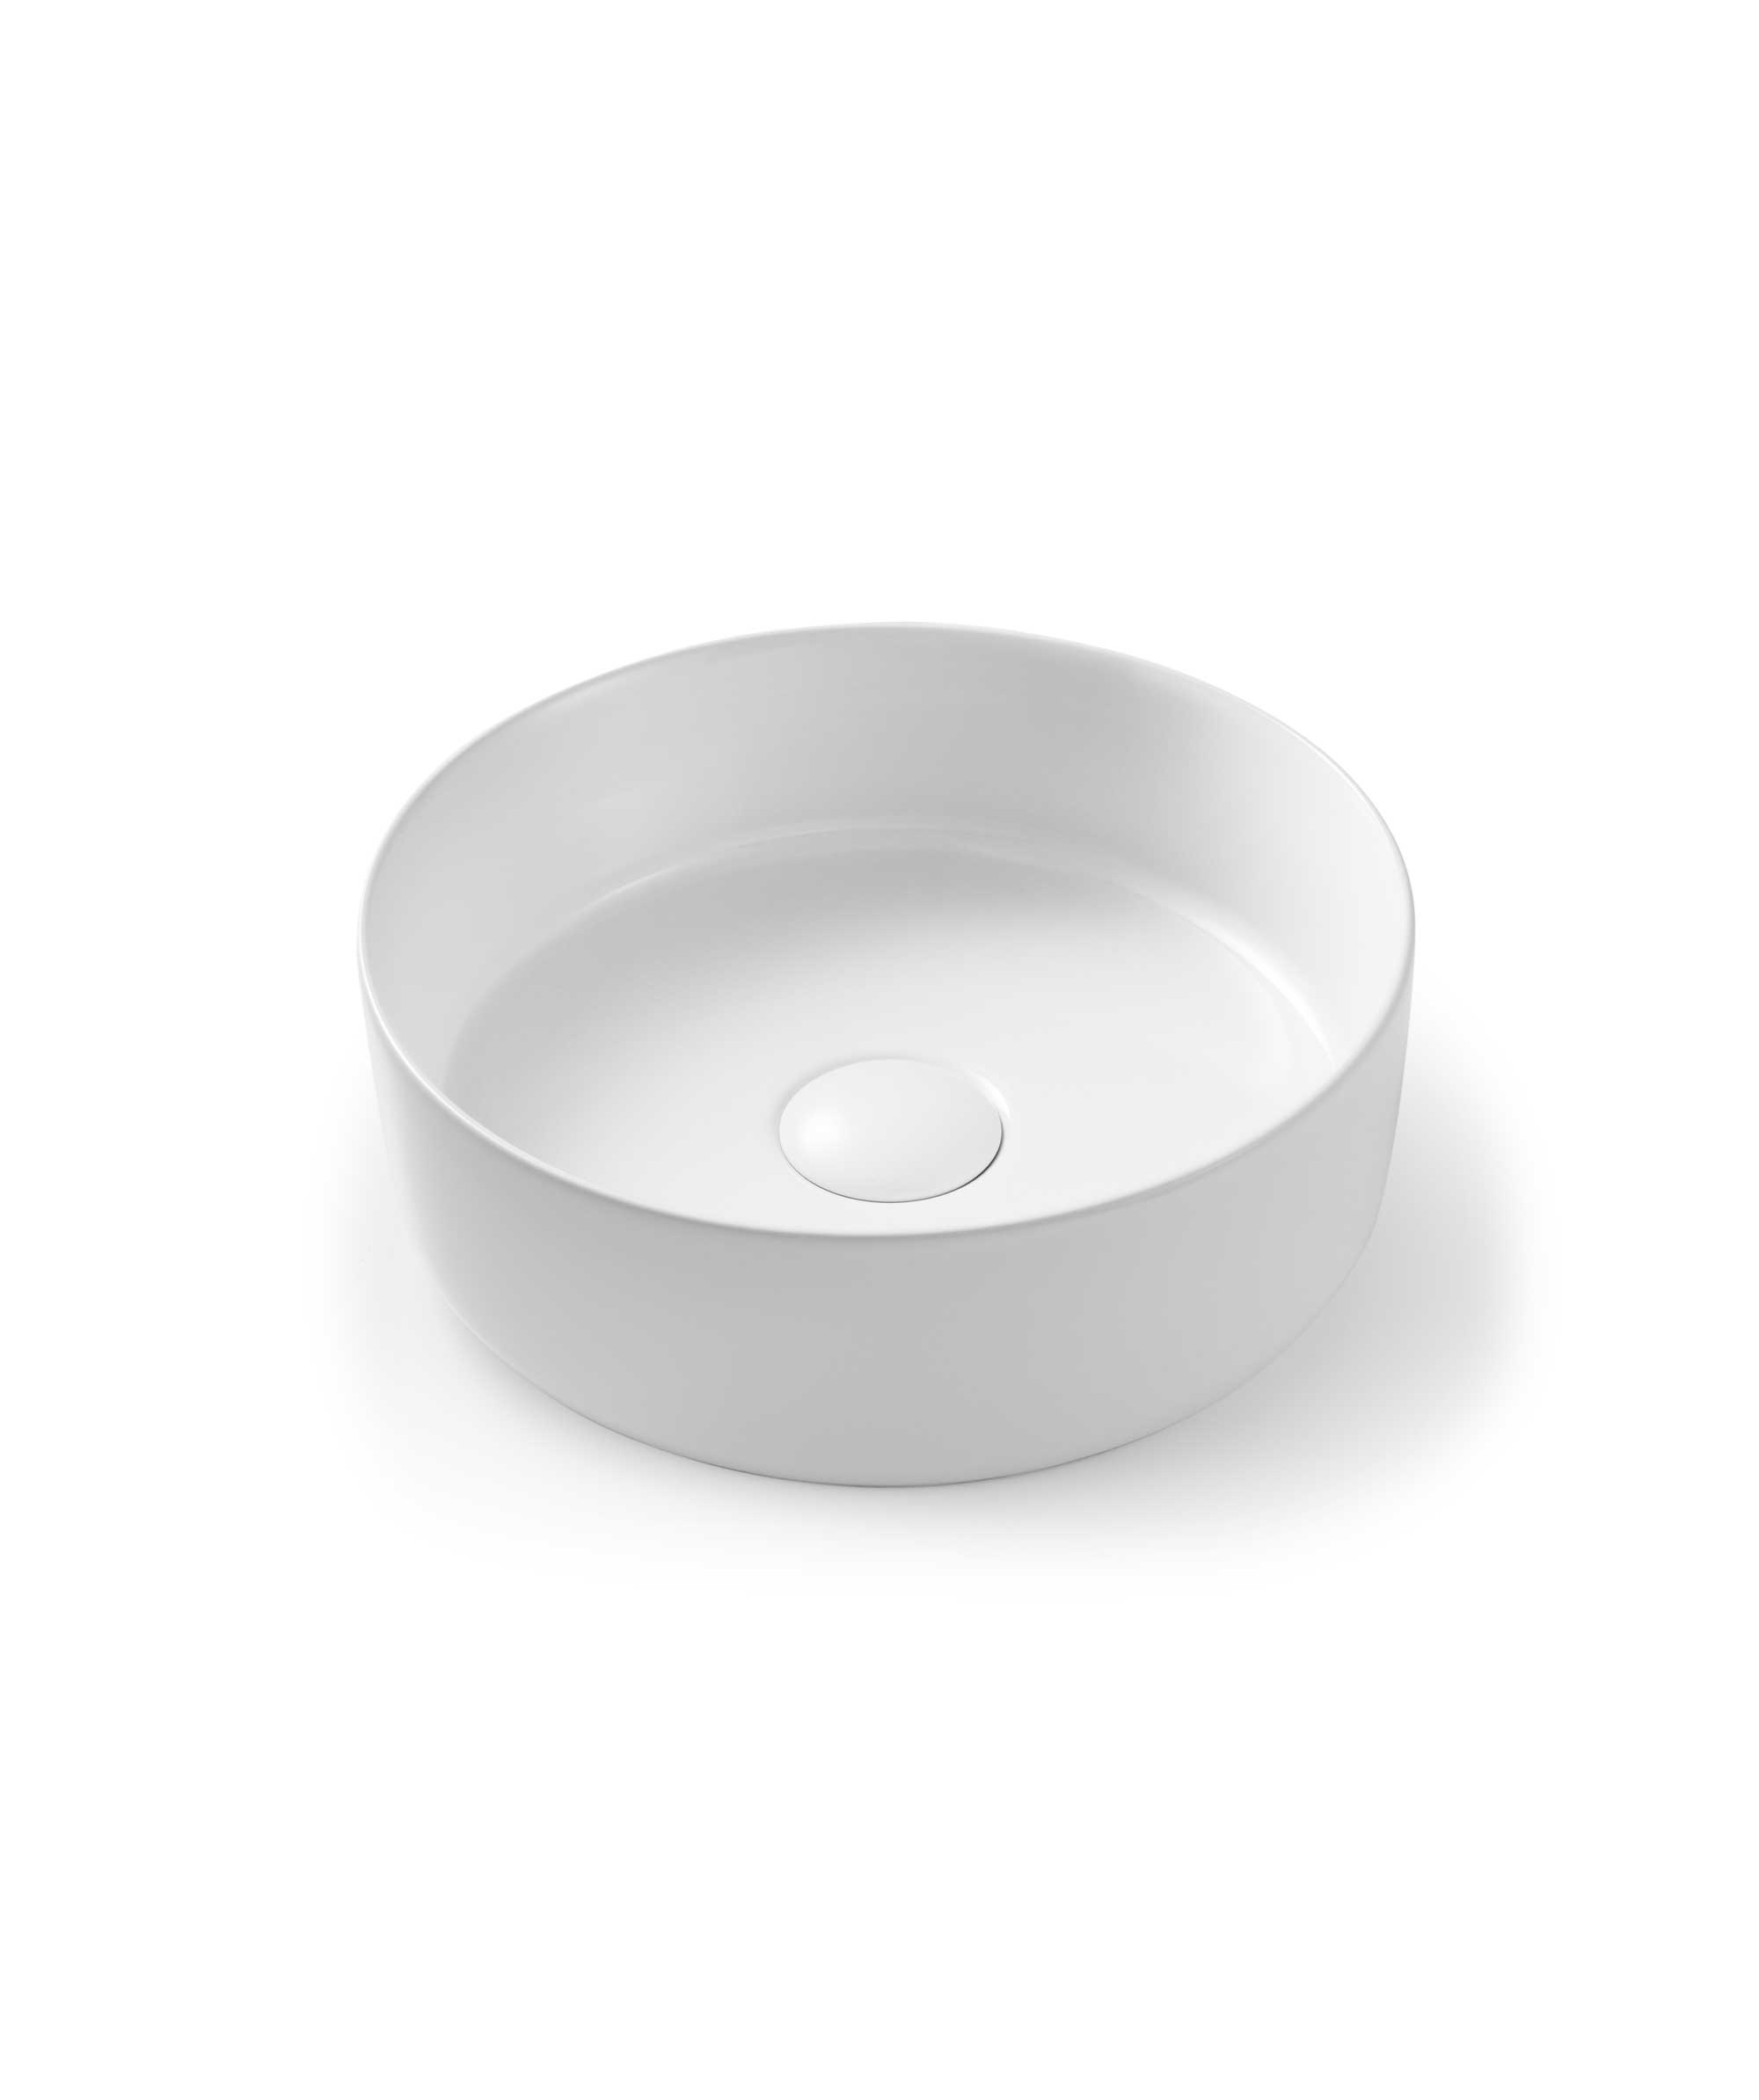 Arko 310 - White Gloss - compact size